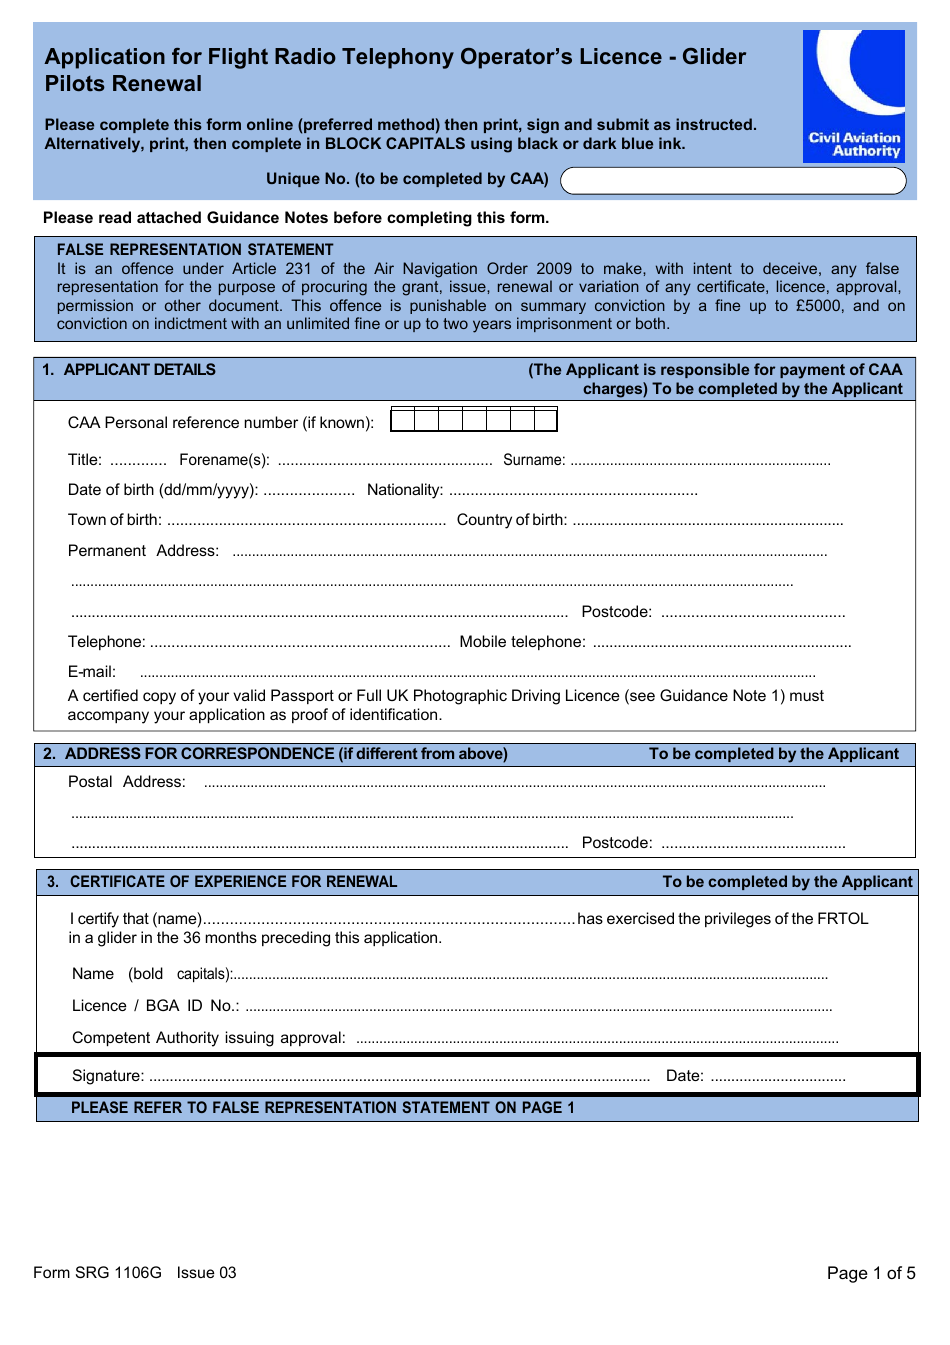 Form SRG1106G Application for Flight Radio Telephony Operators Licence - Glider Pilots Renewal - United Kingdom, Page 1